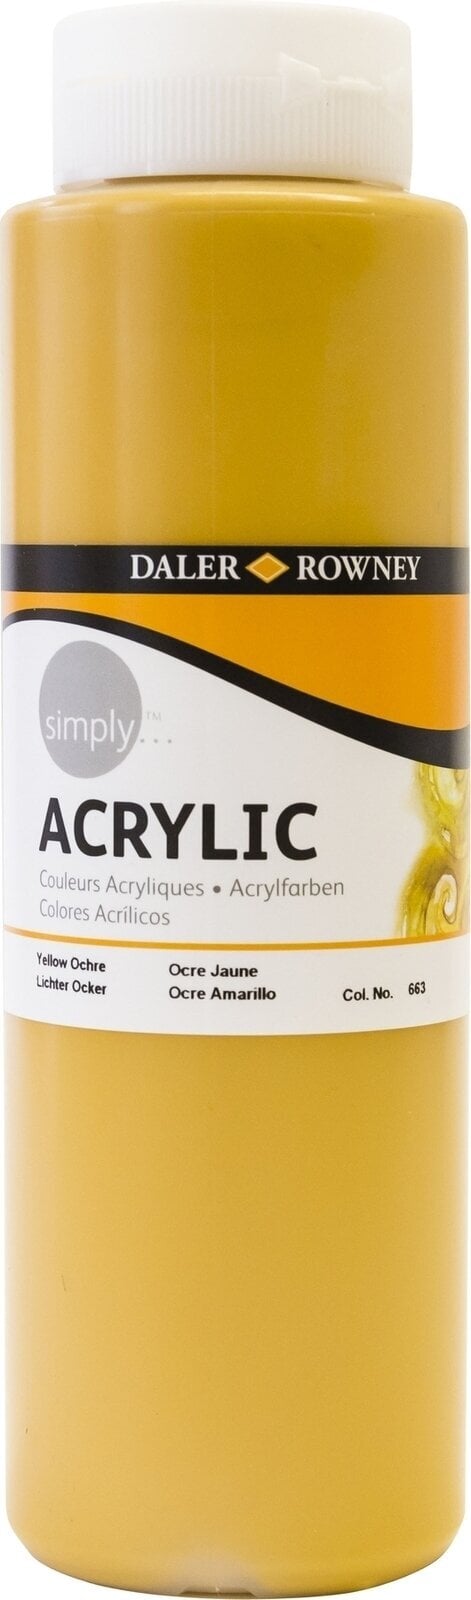 Akrylmaling Daler Rowney Simply Akrylmaling Yellow Ochre 750 ml 1 stk.